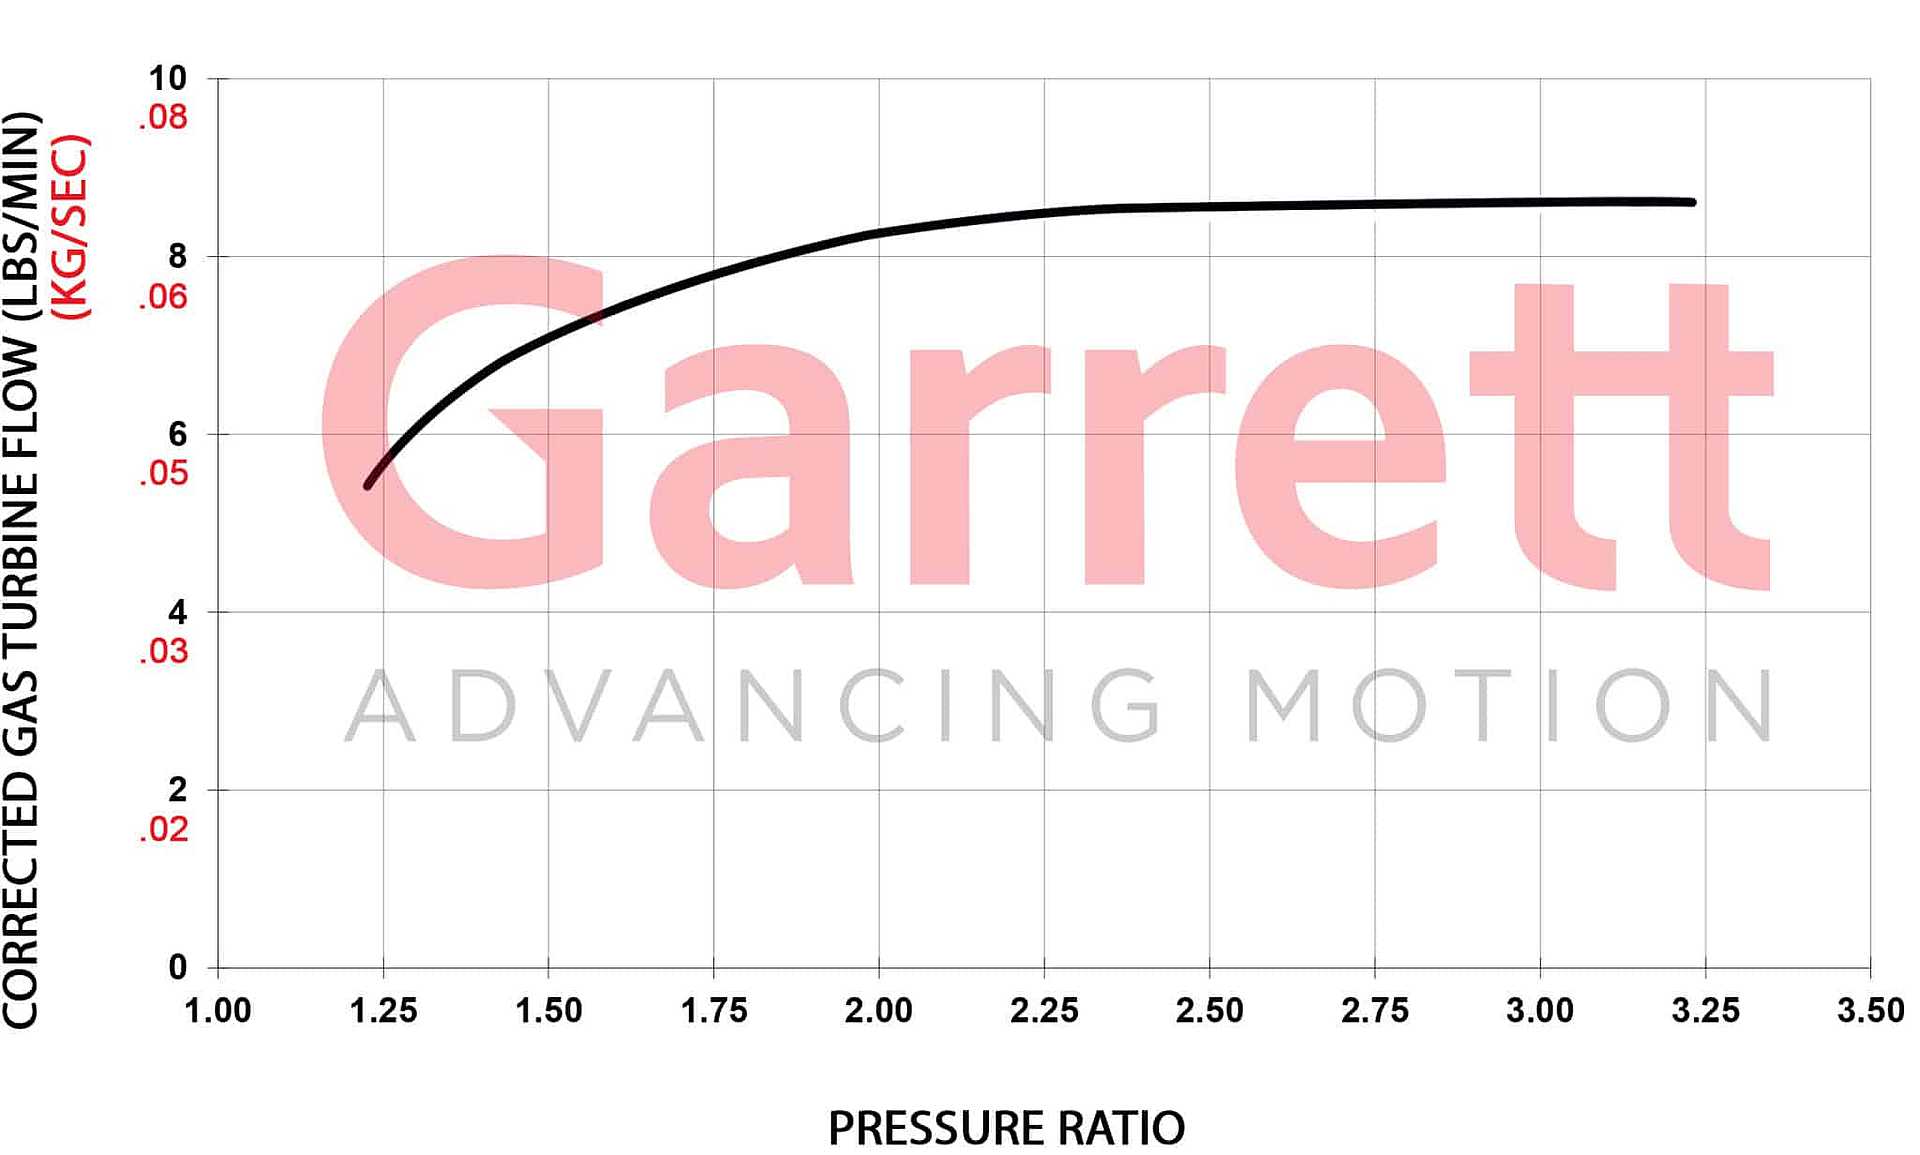 Garrett GBC14-200 Turbocharger 0.45 A/R IWG